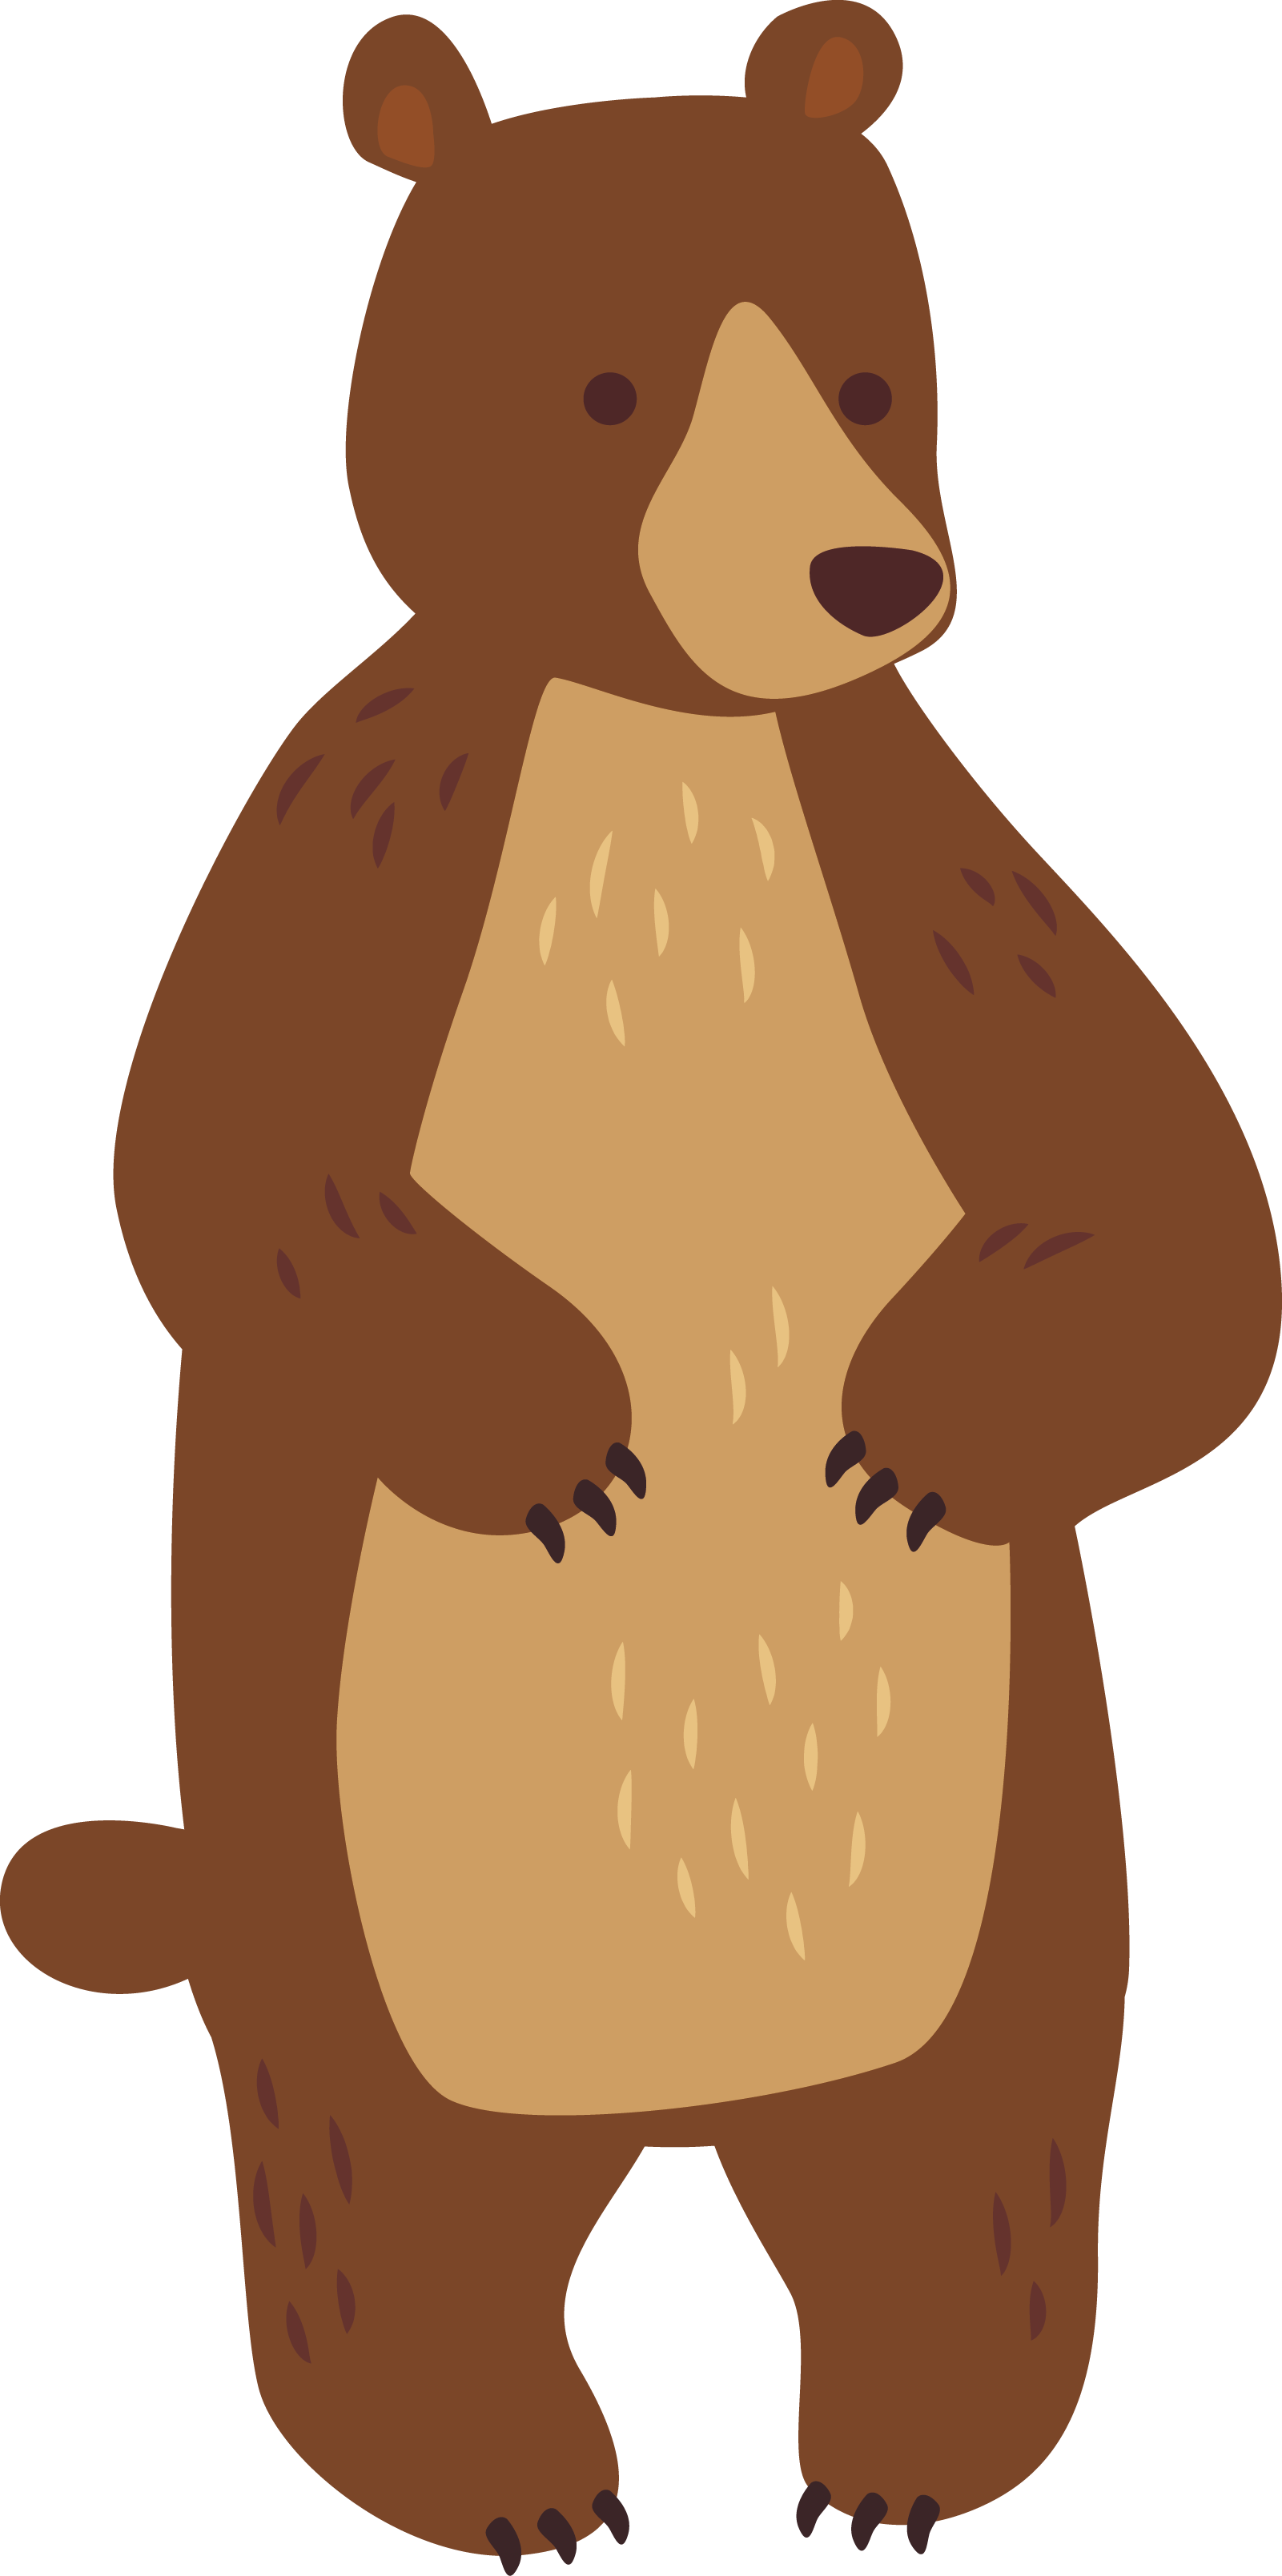 Bear Cartoon Adobe Illustrator - Bear cartoon design png download